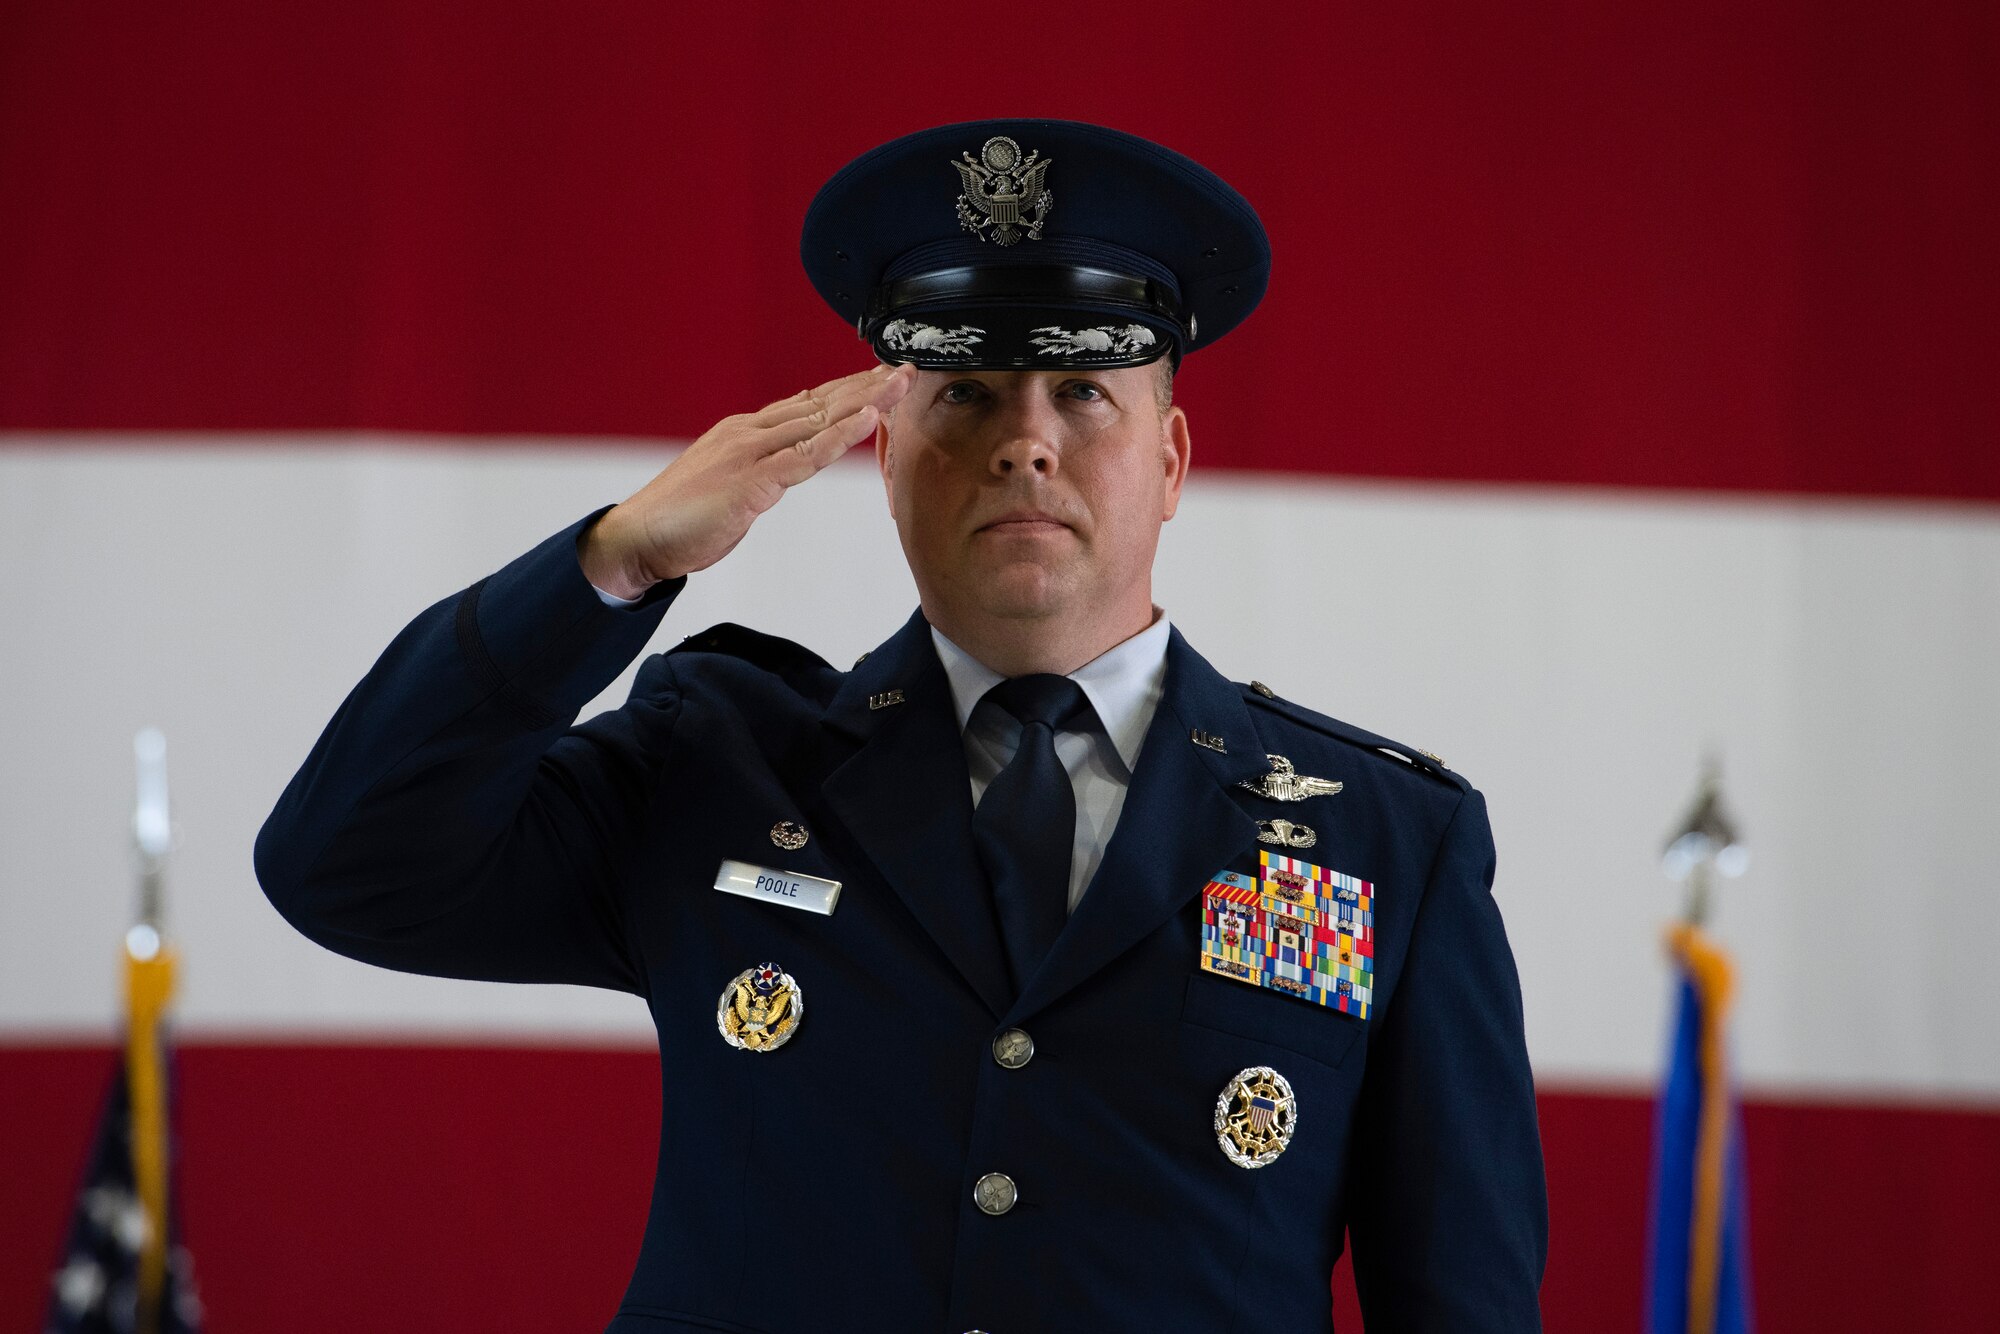 U.S. Air Force member renders salute